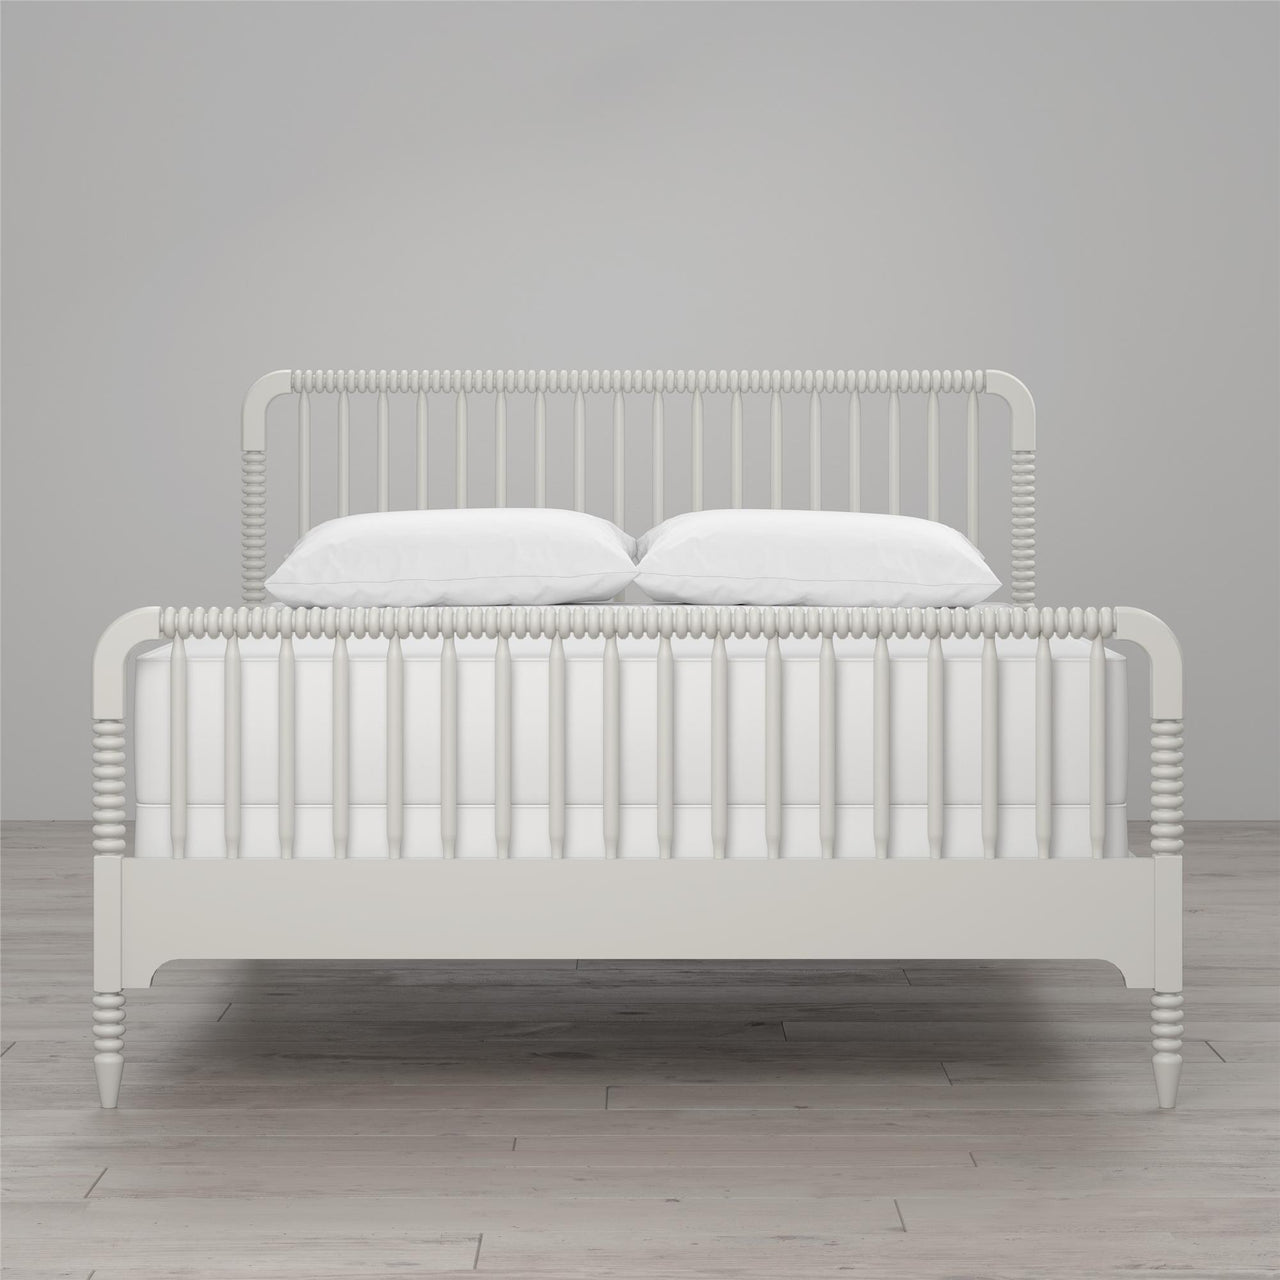 Rowan Valley Linden Kids’ Bed - White - Full